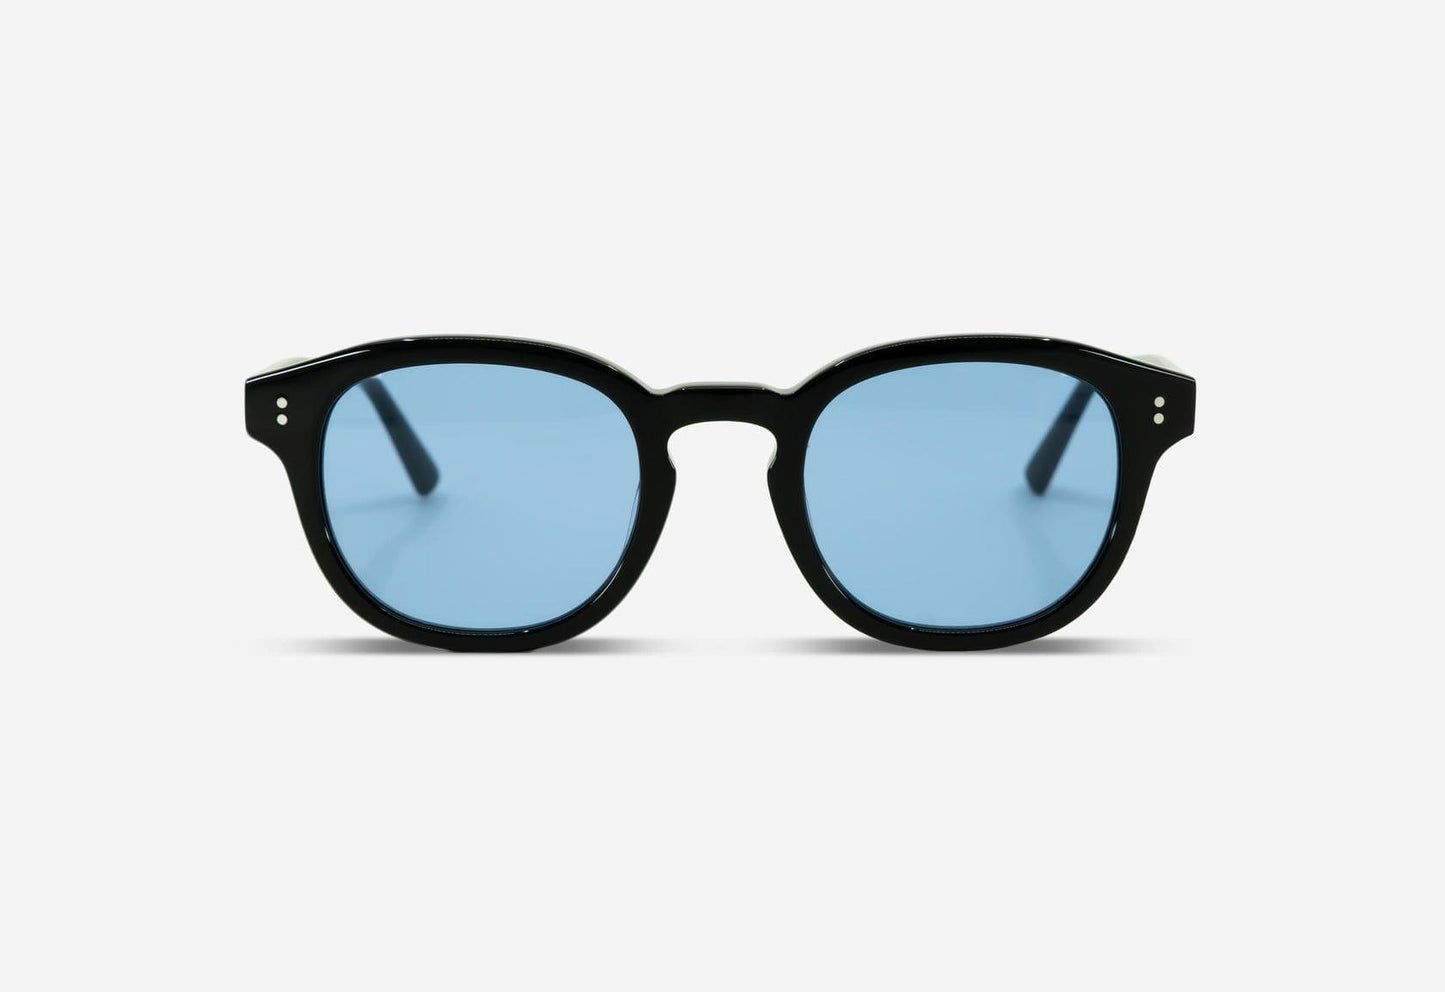 Bille Rose, Round sunglasses for men and women blue lens UV400 protection